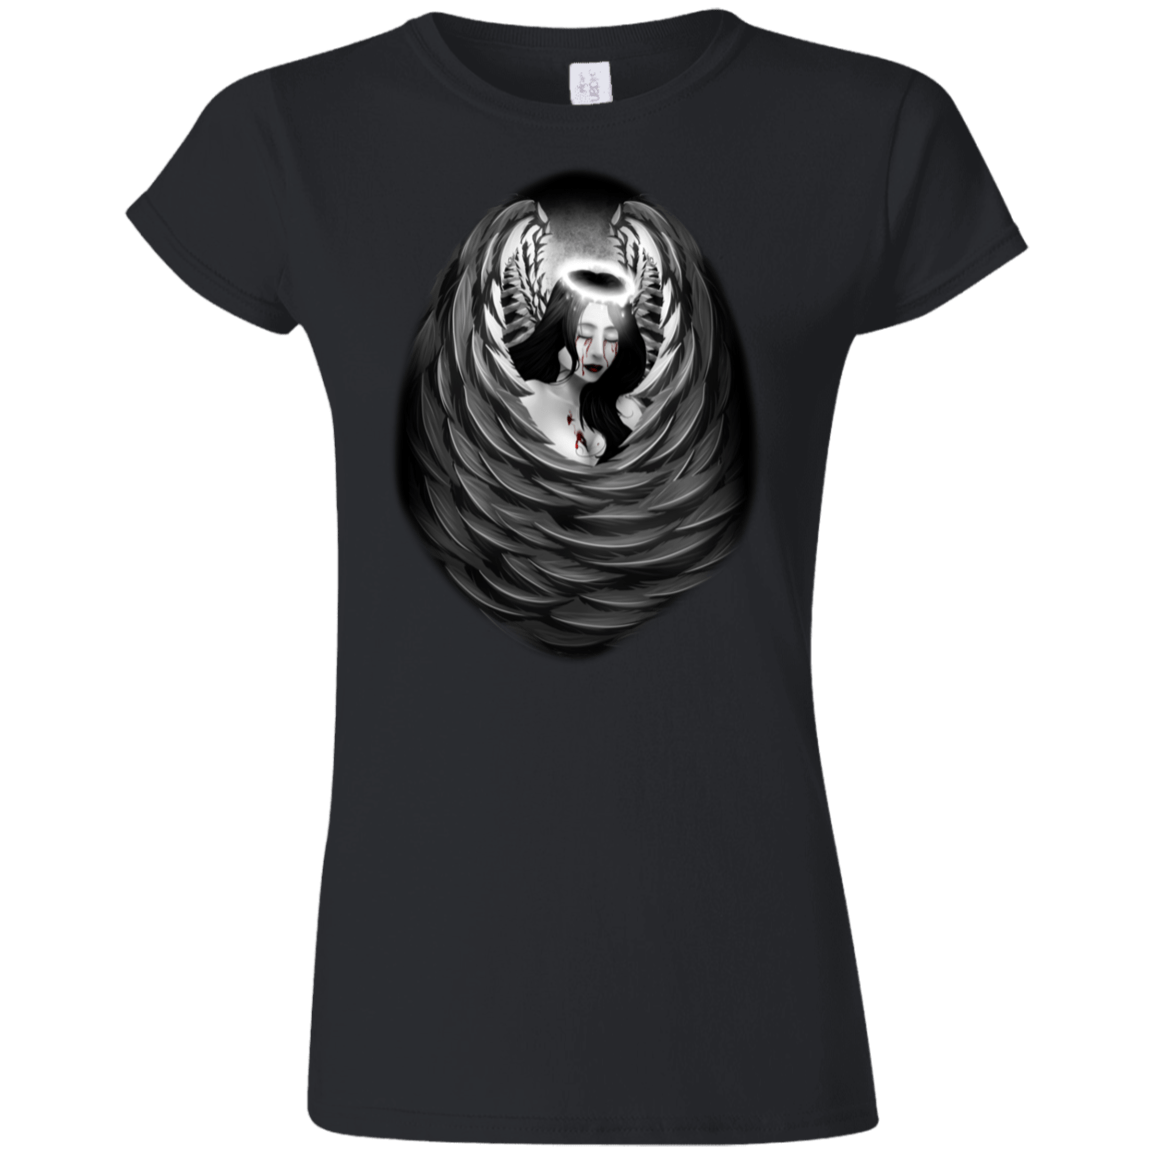 T-Shirts Black / S Wild Junior Slimmer-Fit T-Shirt